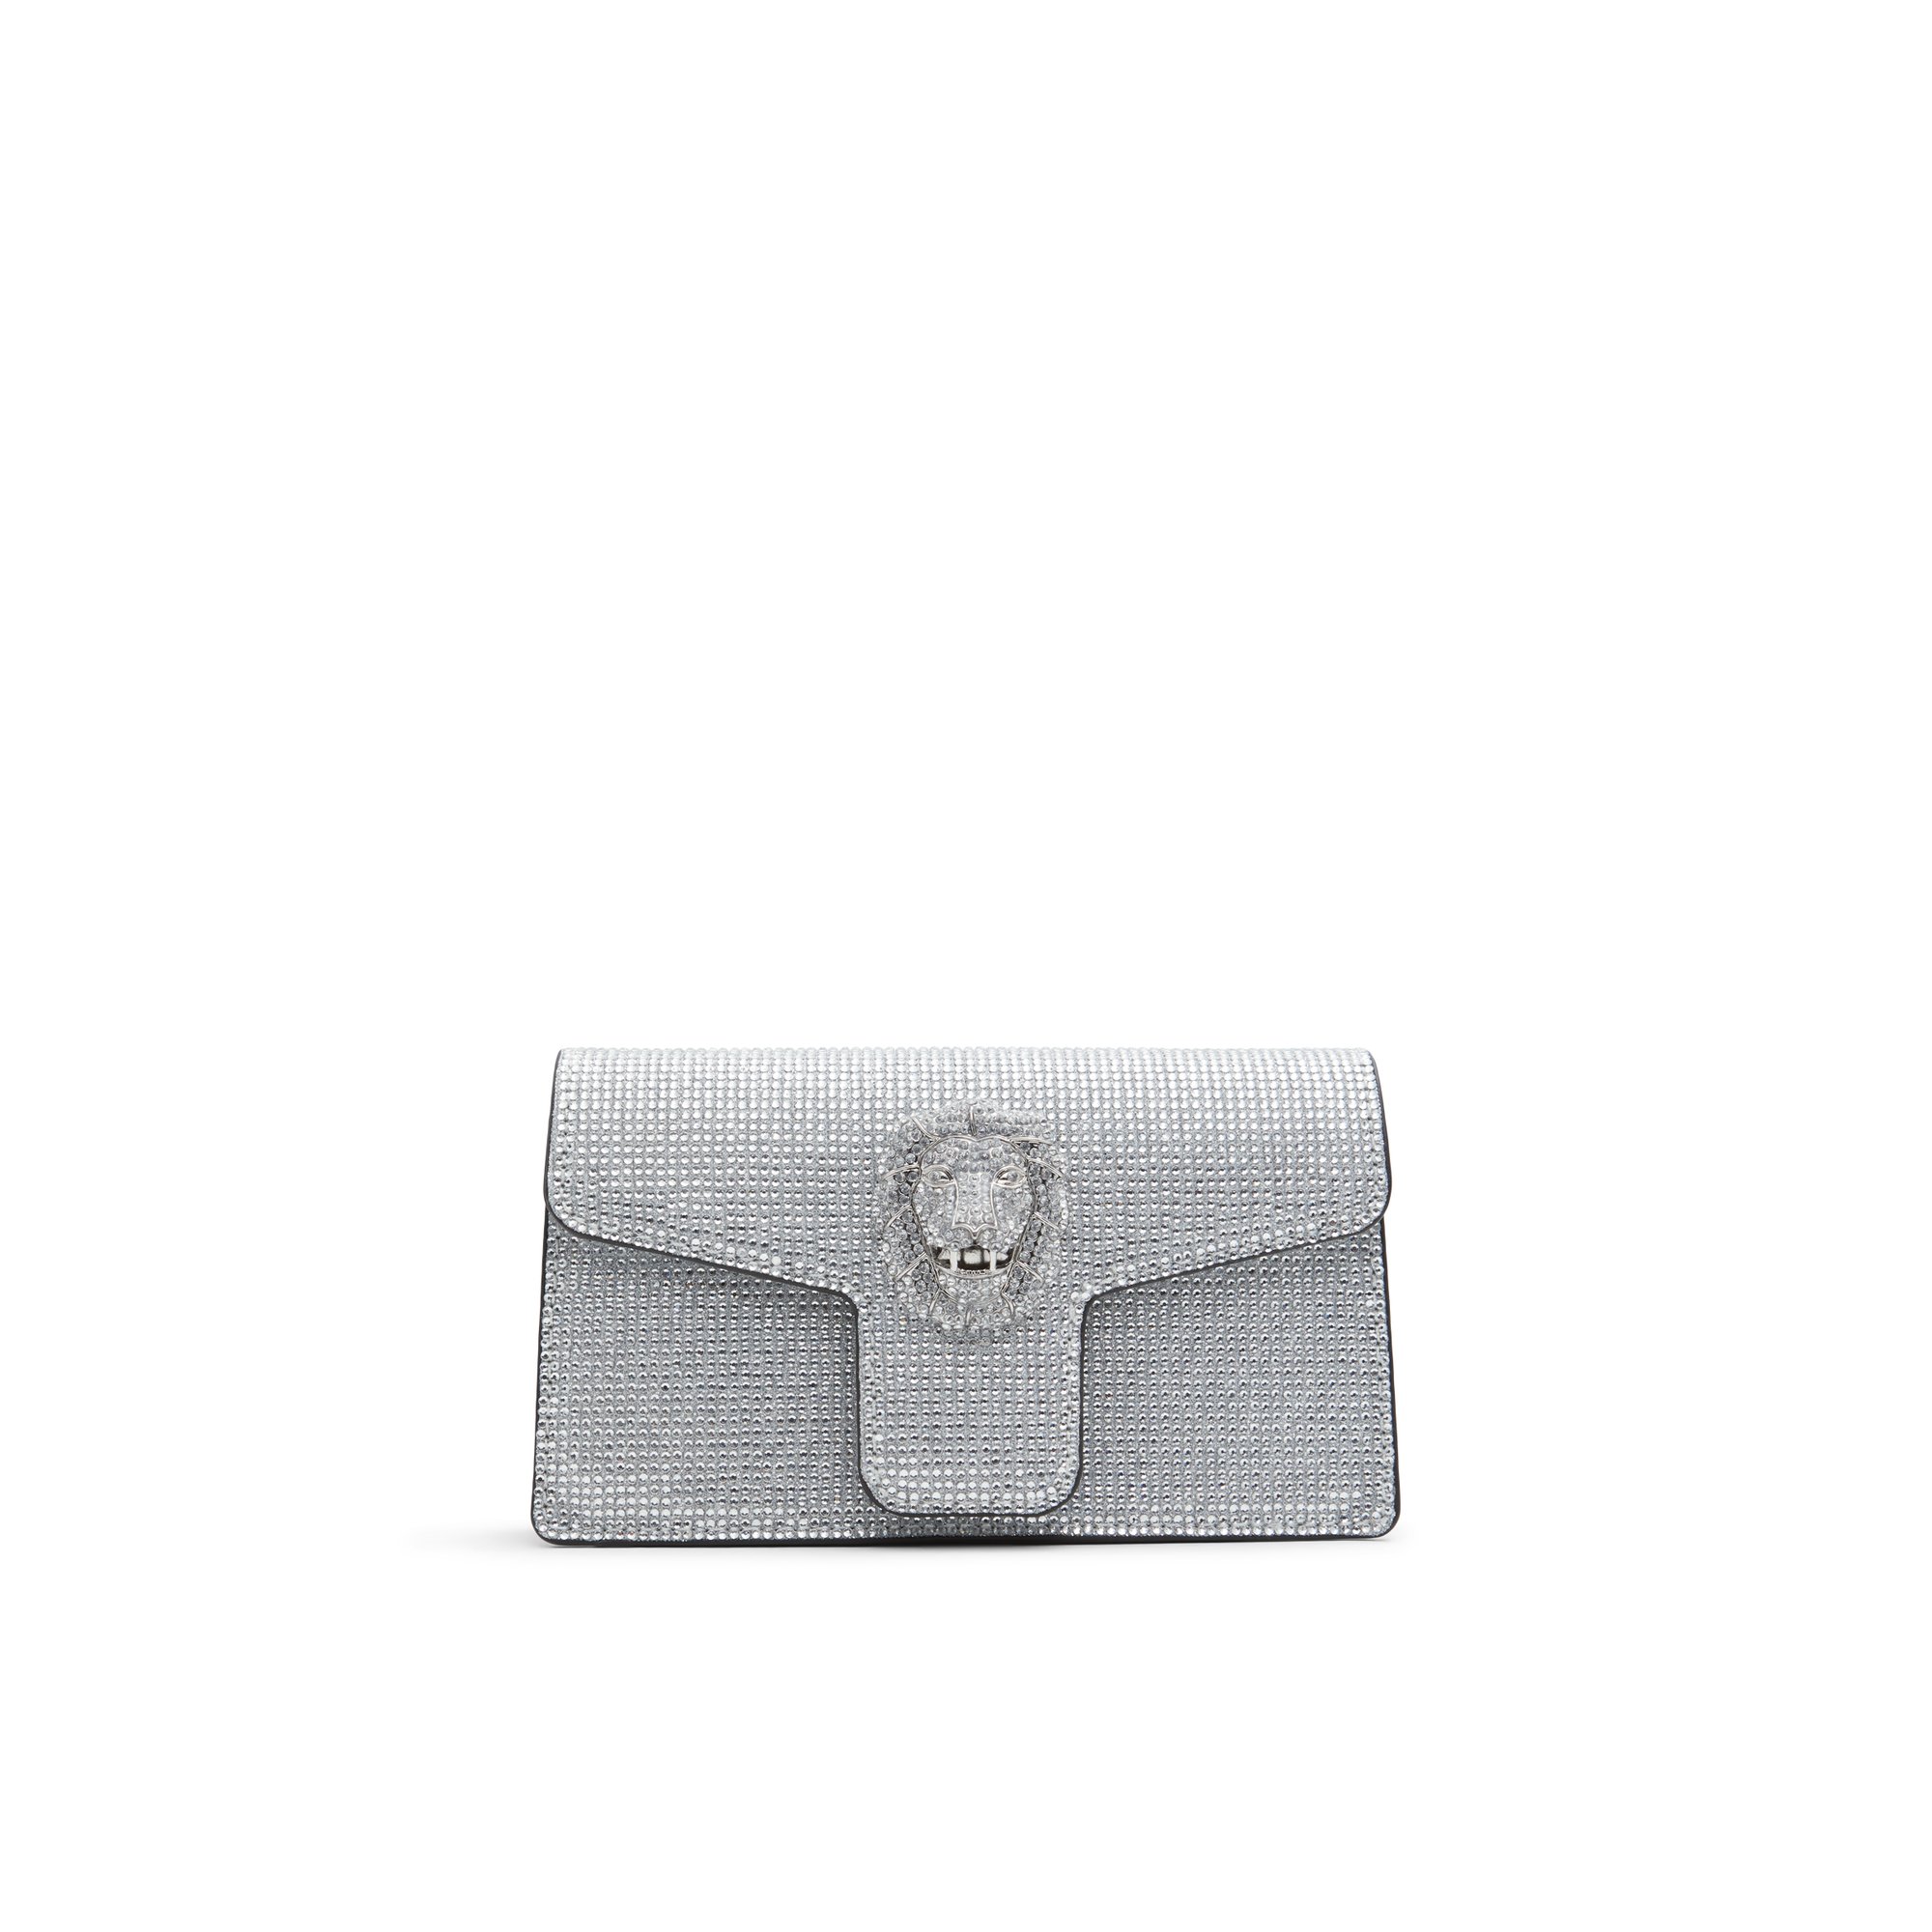 ALDO Wilathax - Women's Mini Bag Handbag - Silver